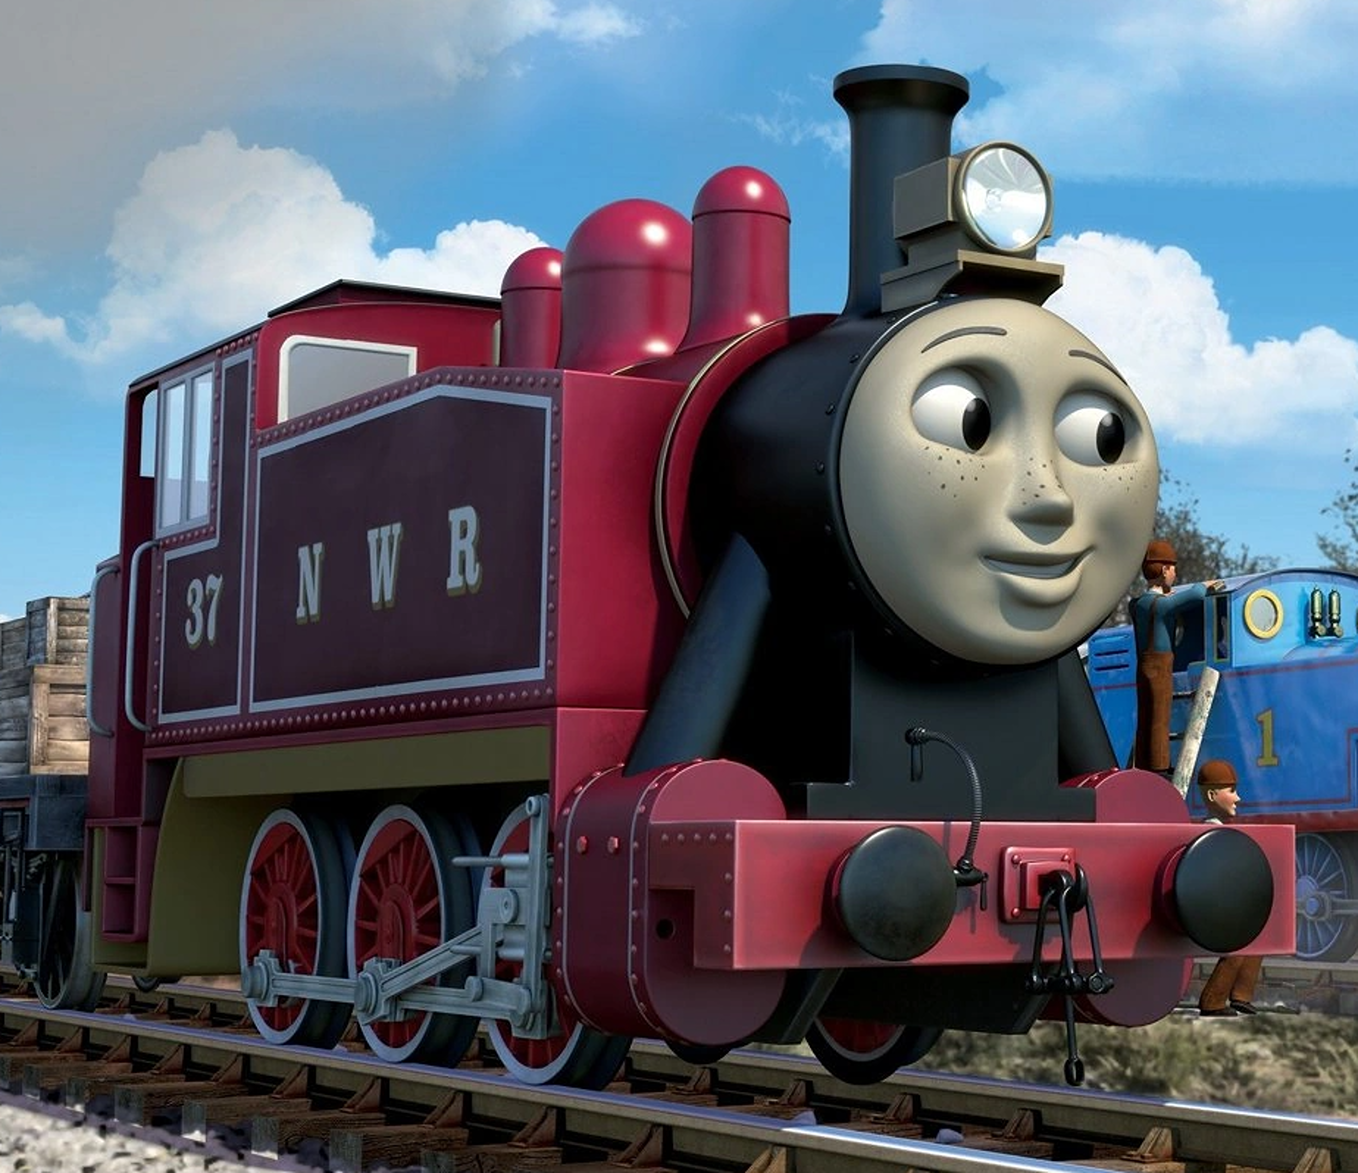 Thomas the Train Rosie Tank Engine Wooden Railway Friends Pink Purple Train